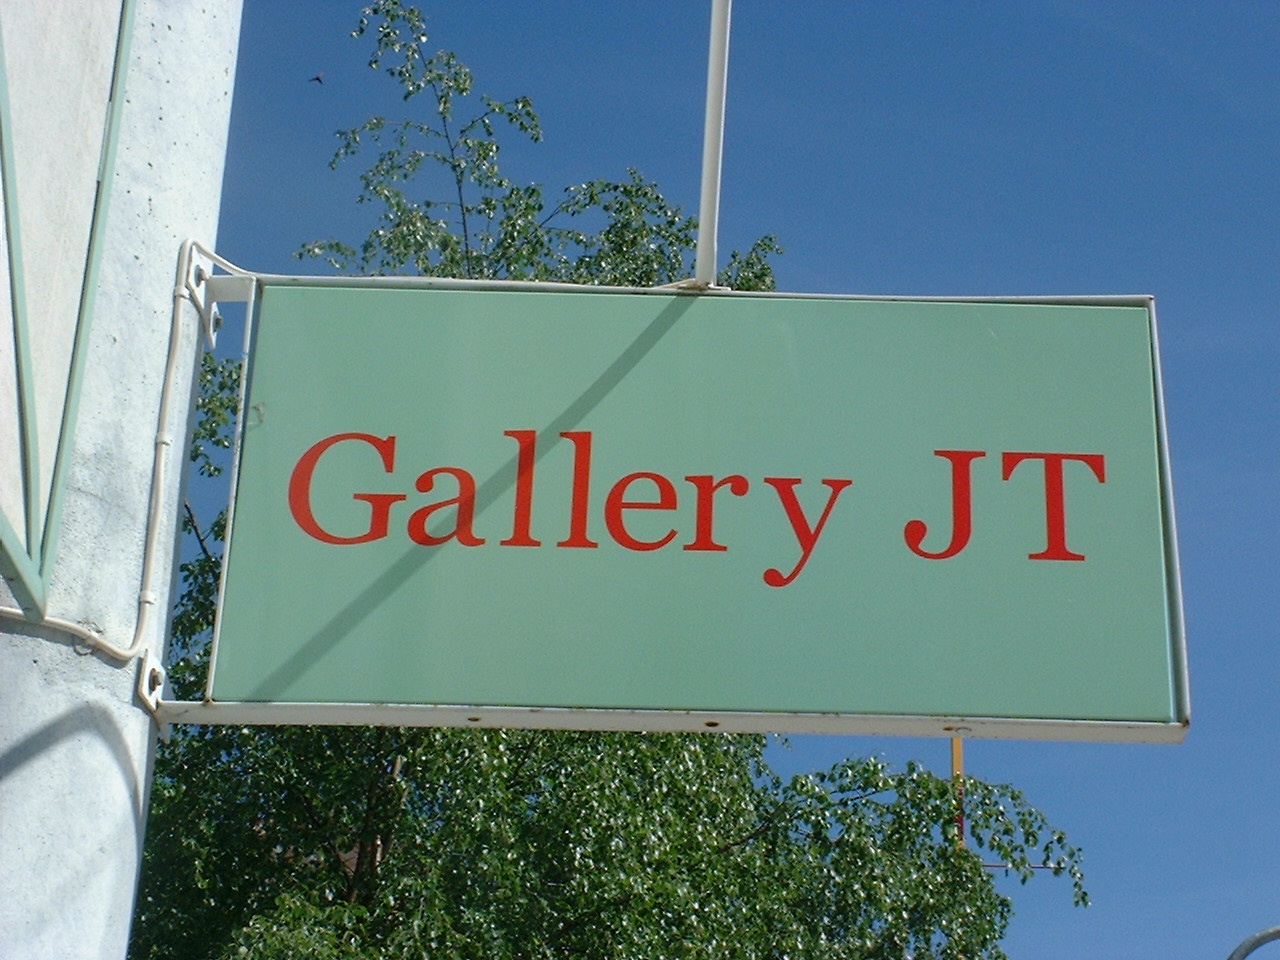 1. Gallery JT AB art price butik lnk.